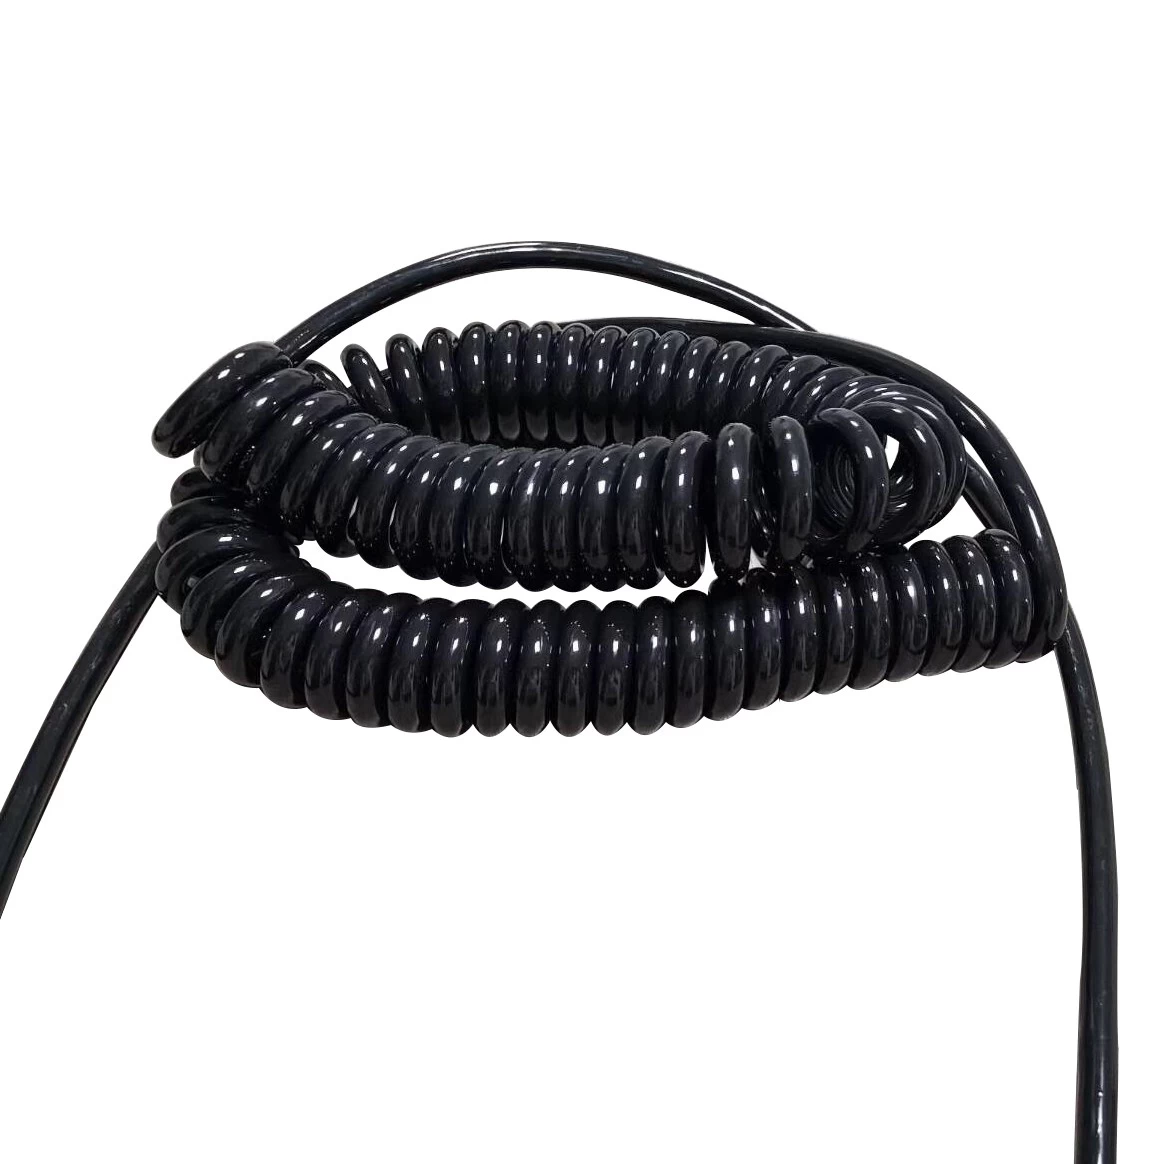 7 8 9 10 core gloss bright shield screen PU flexible customized spiral cable black